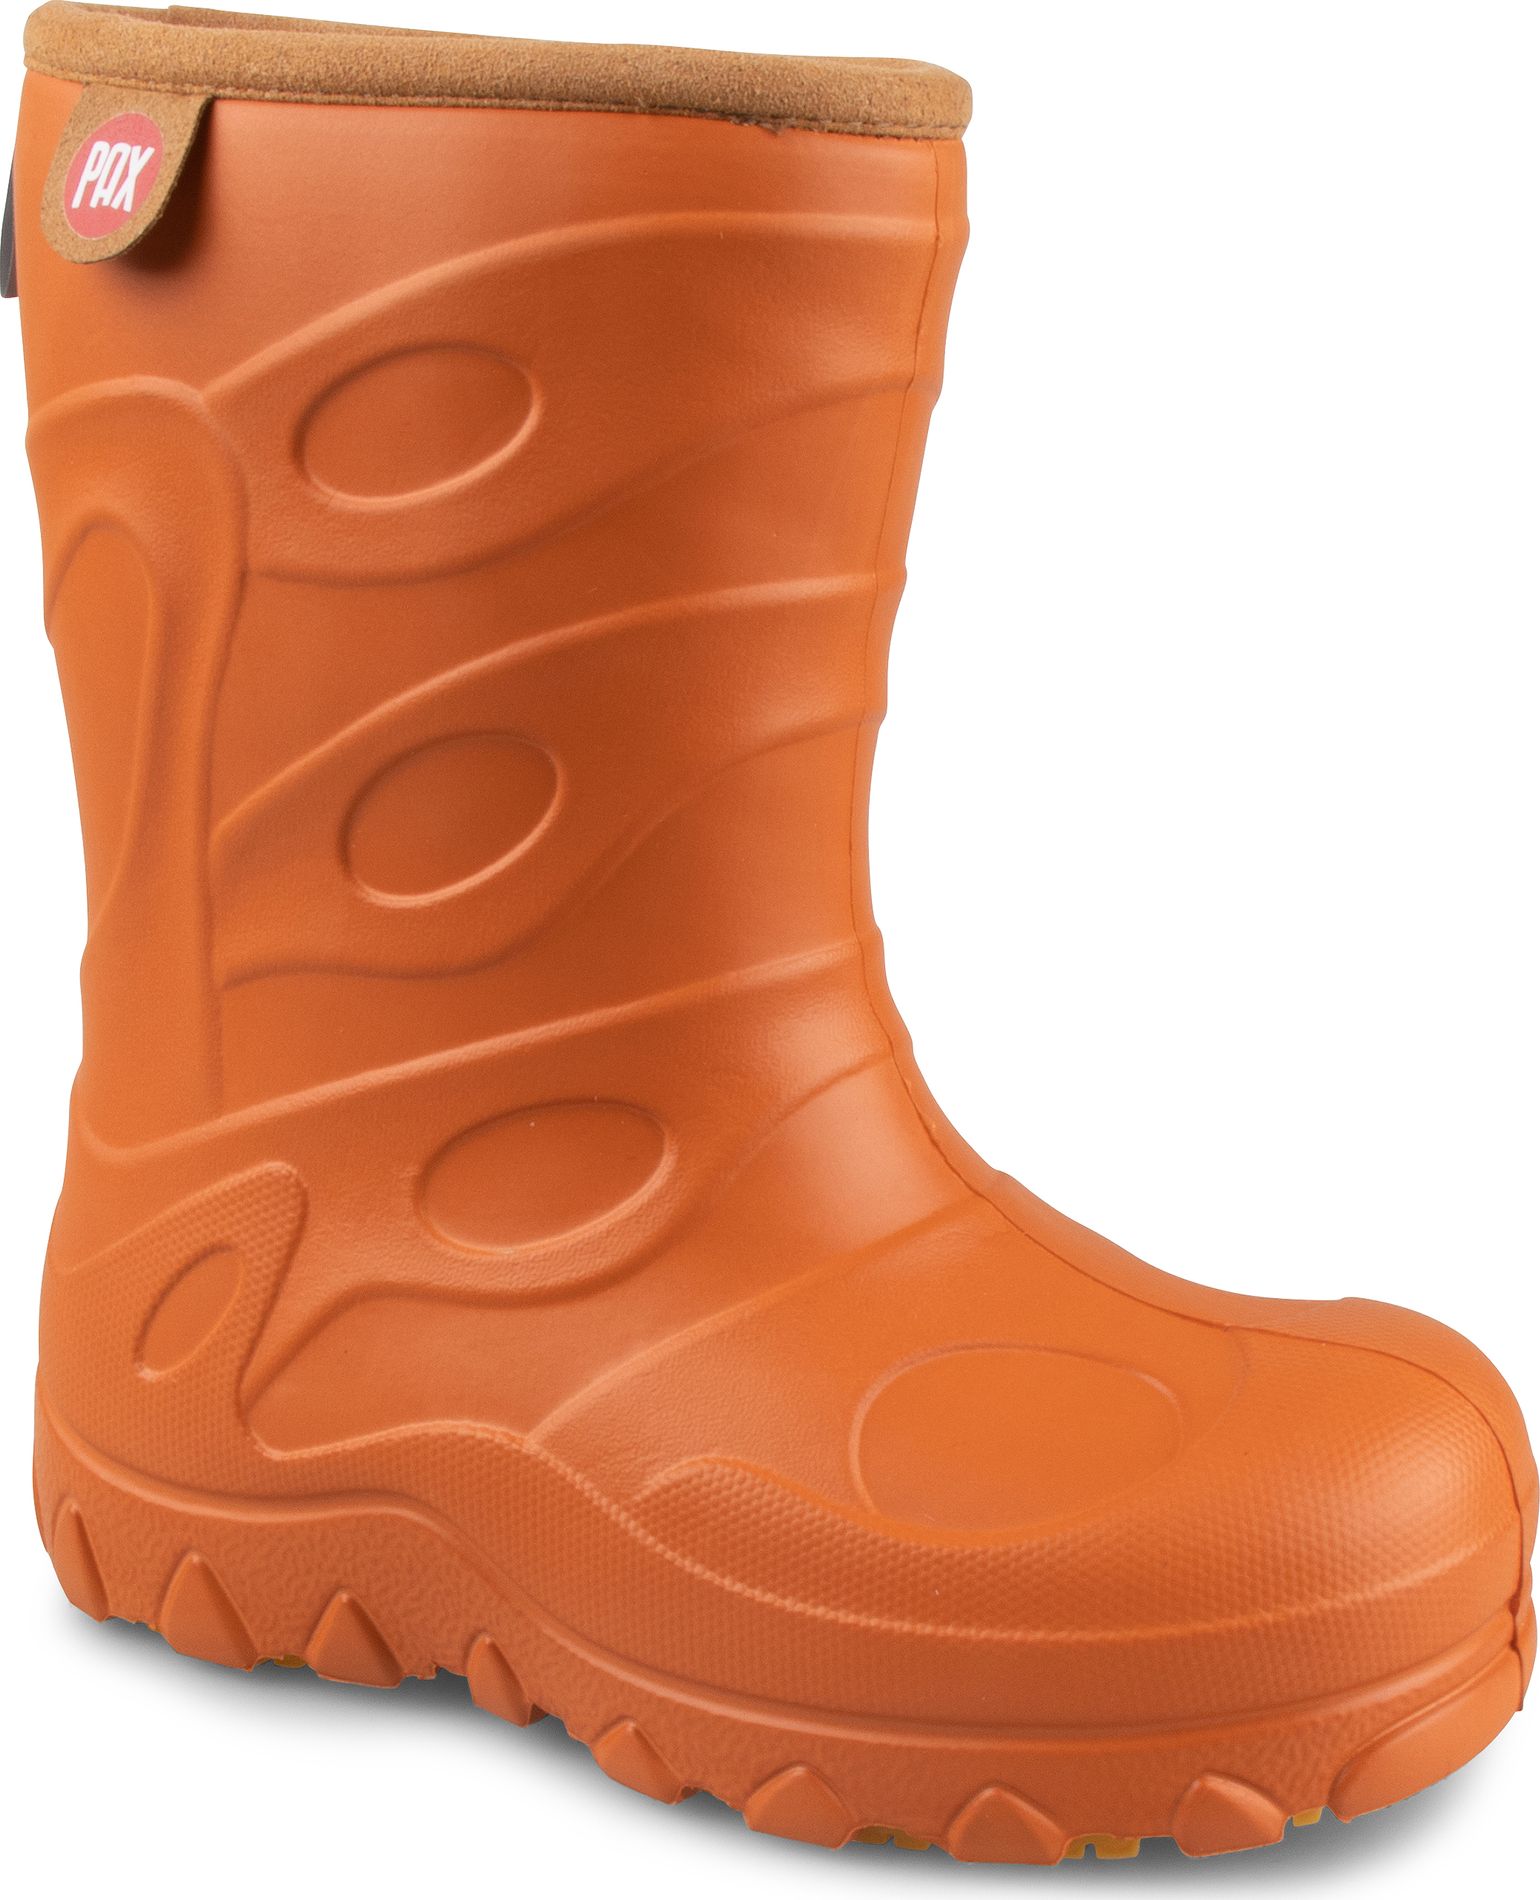 Kids' Inso Rubber Boot Orange